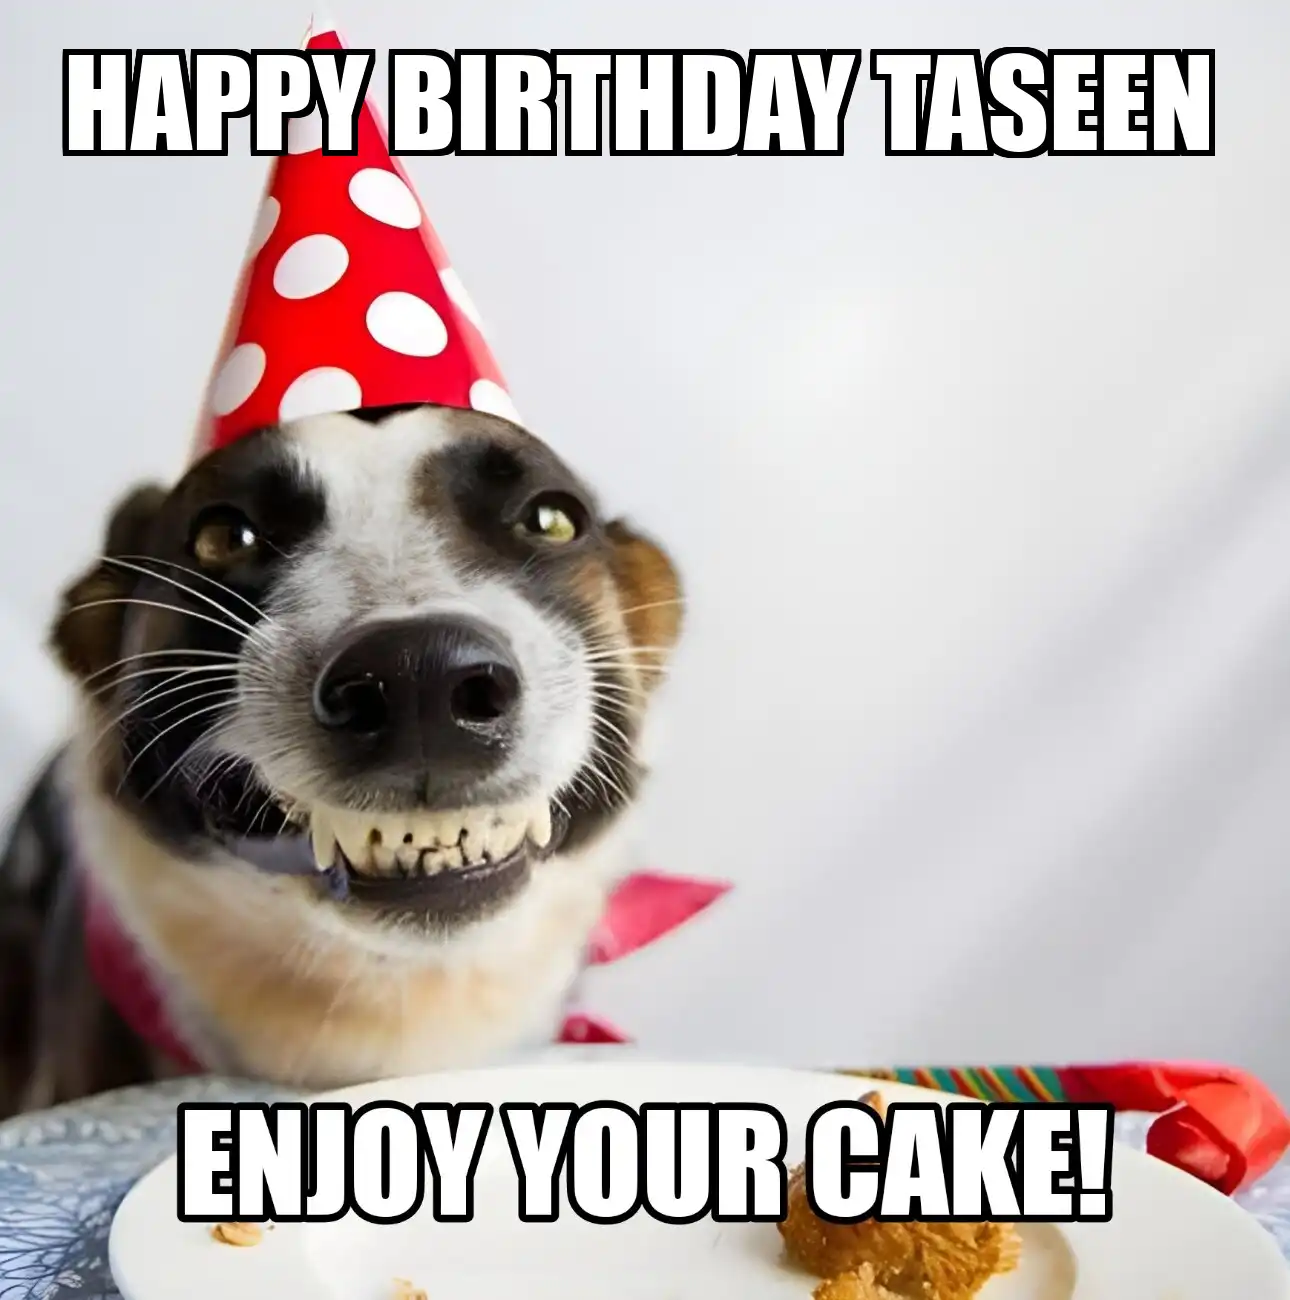 Happy Birthday Taseen Enjoy Your Cake Dog Meme